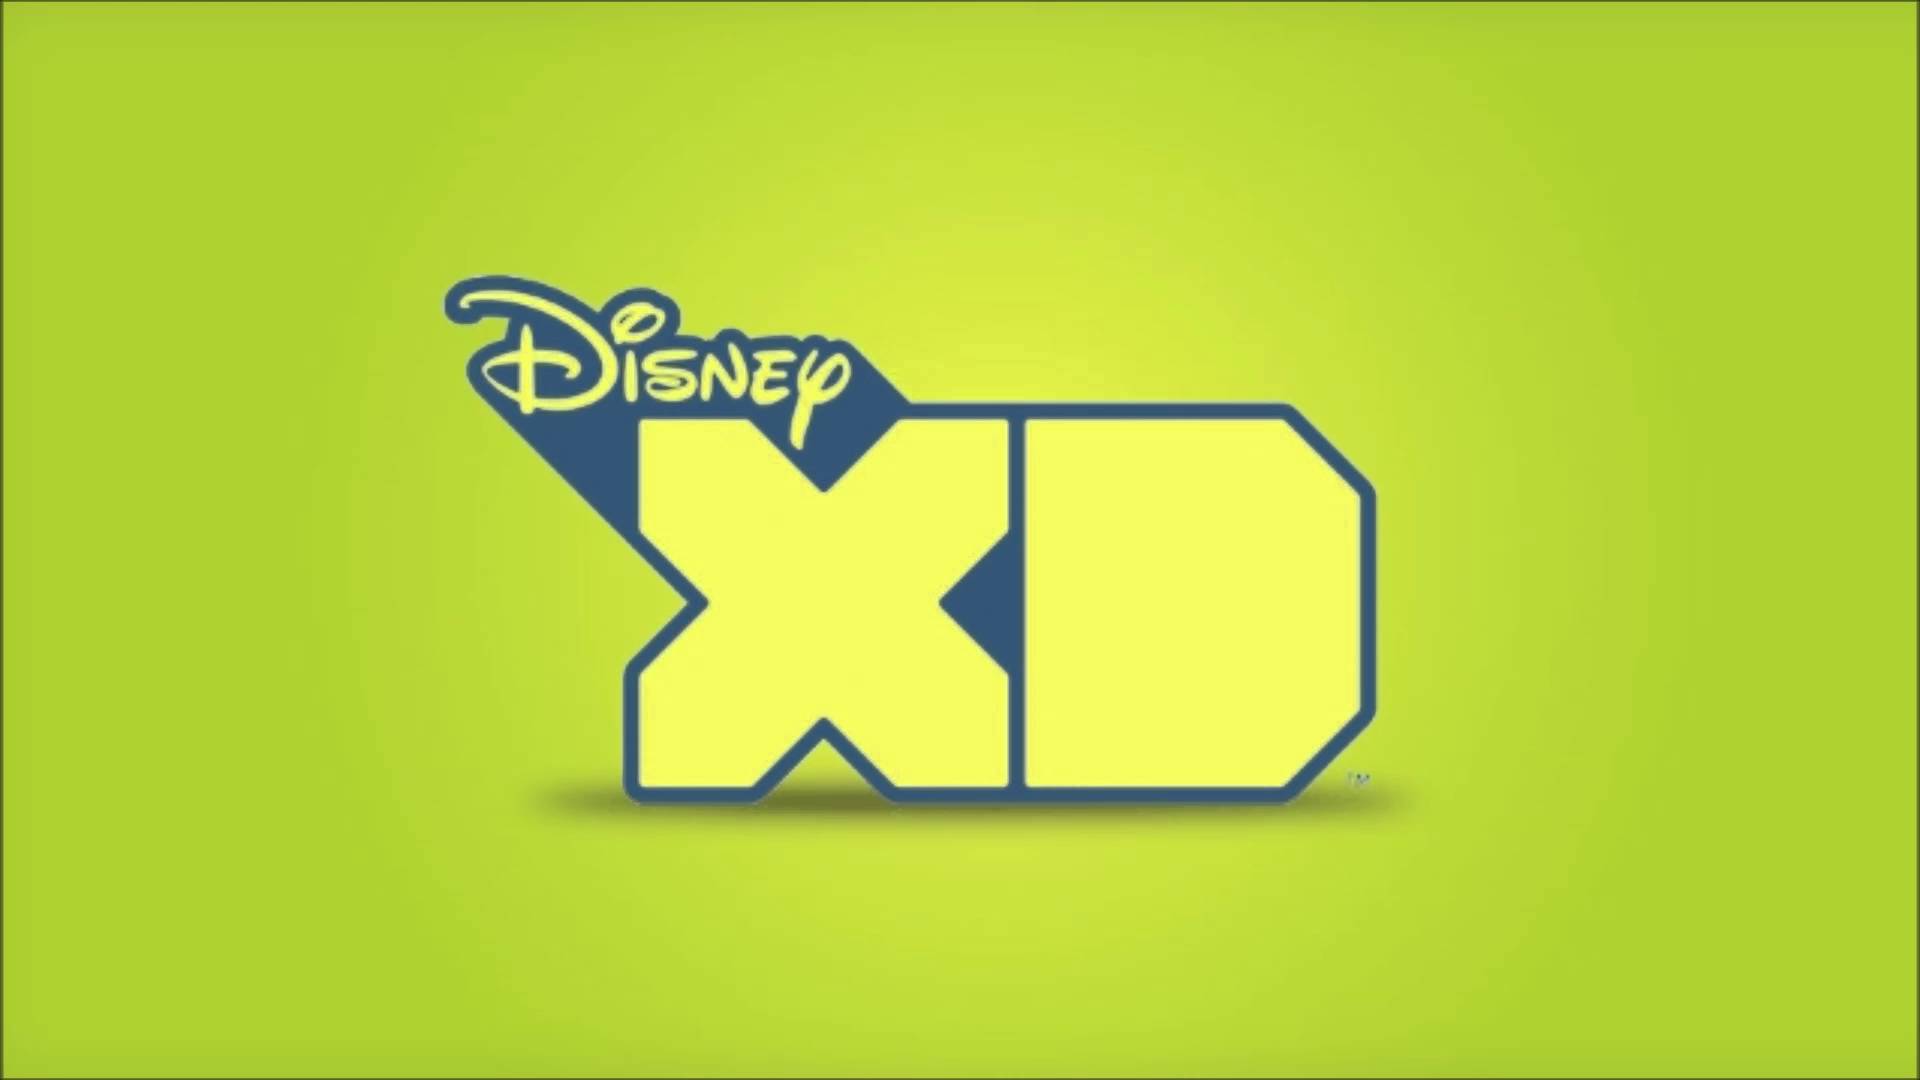 Disney XD Logo - Disney xd Logos